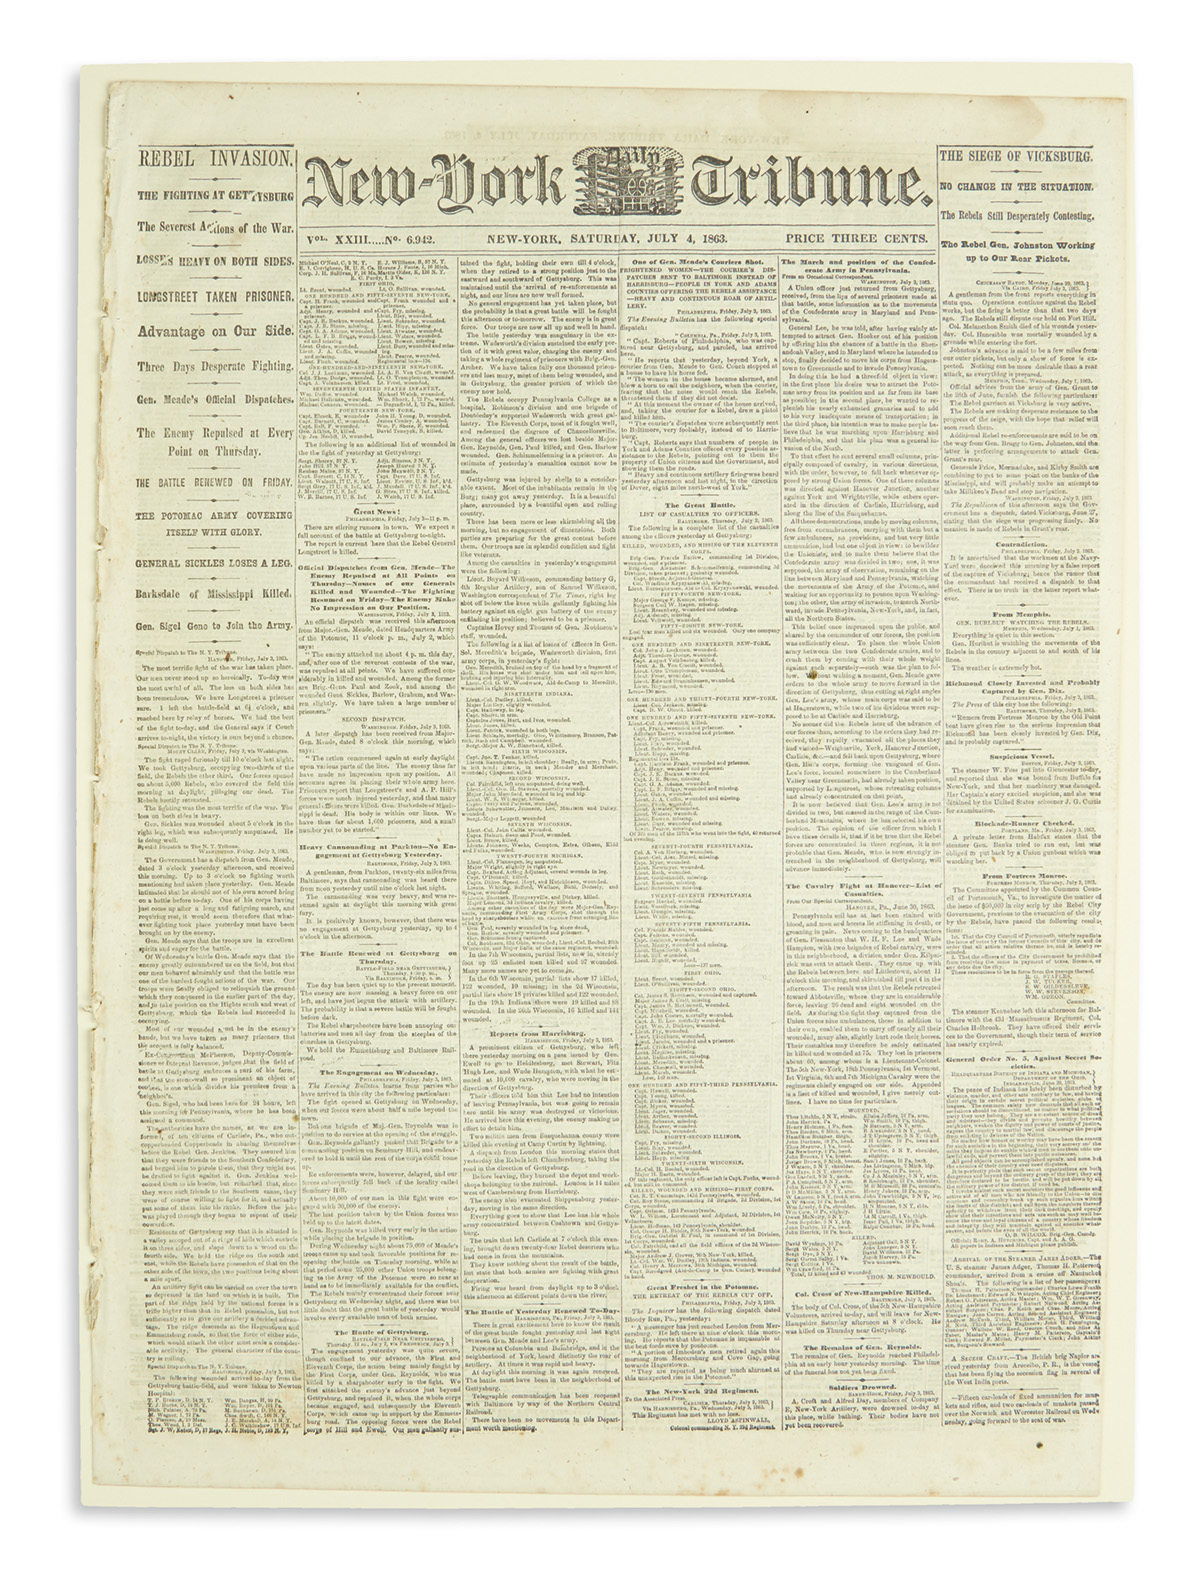 (CIVIL WAR.) New-York Tribune account of the Battle of Gettysburg.